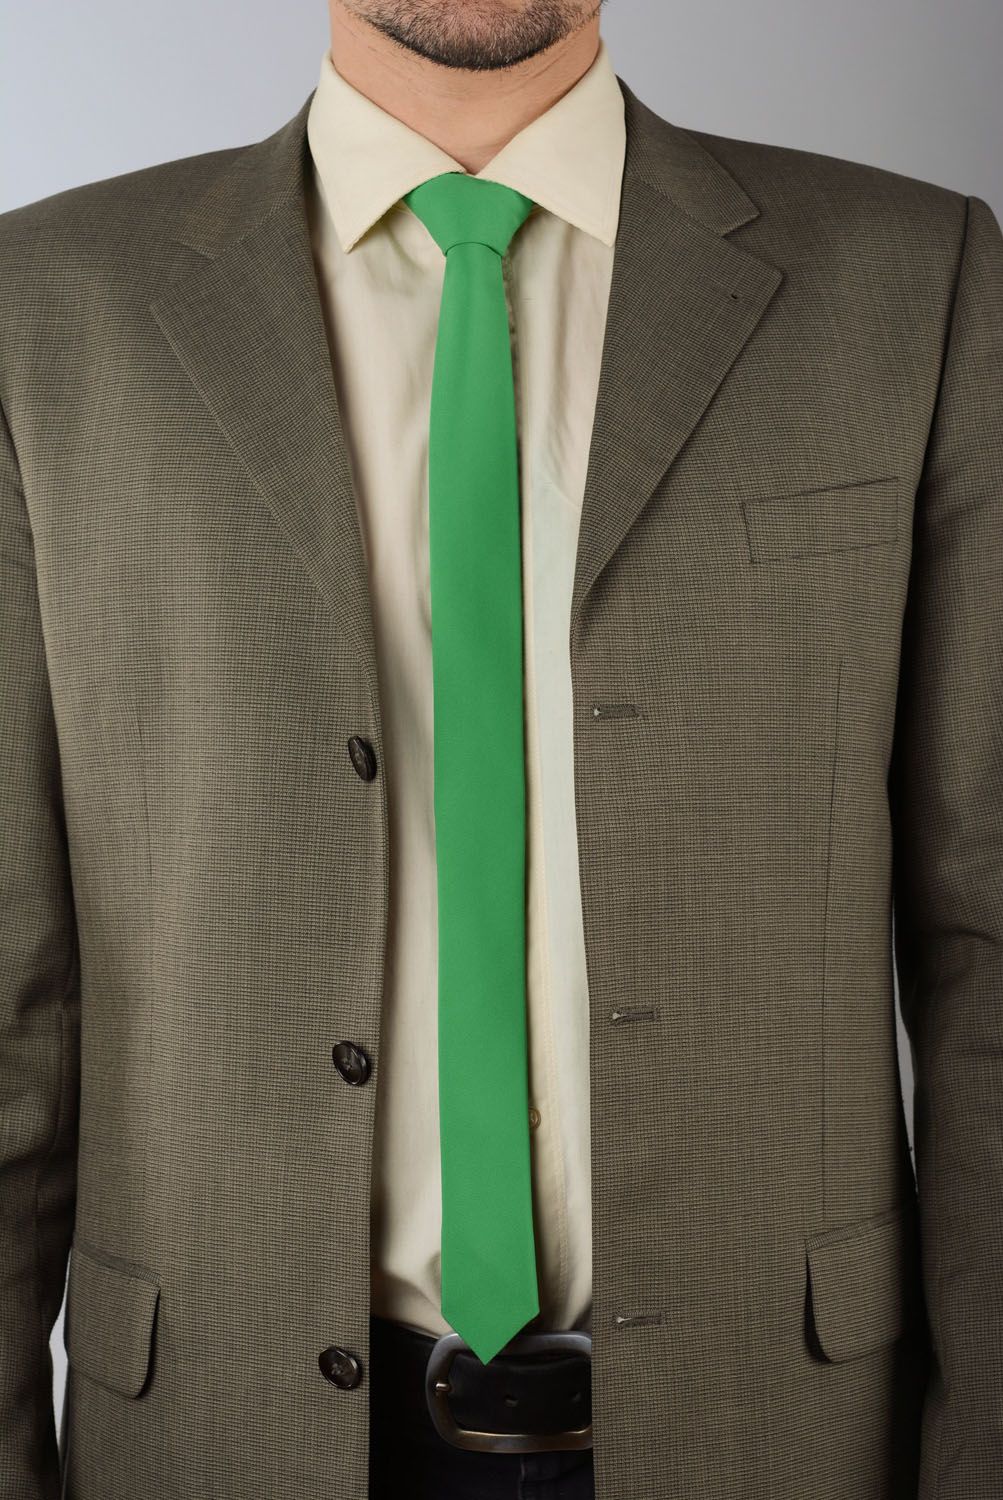 Cravate en gabardine verte faite main photo 1